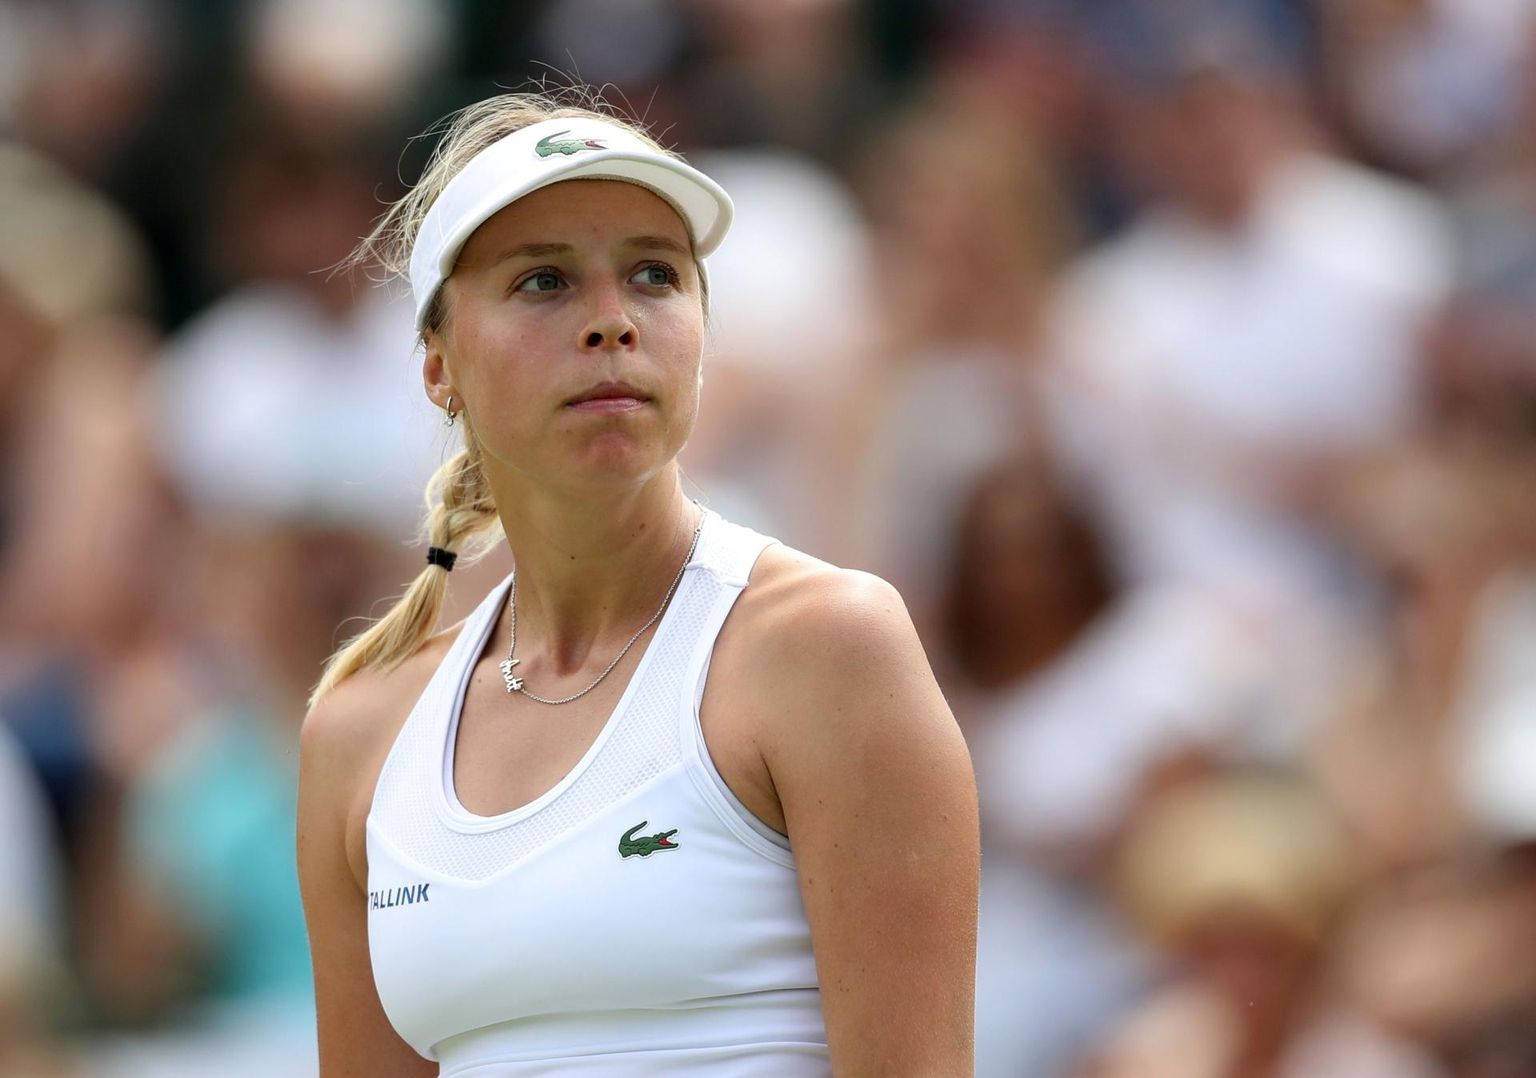 Eesti esireket Anett Kontaveit pidi Wimbledonis tunnistama tšehhitar Karolina Muchova paremust.